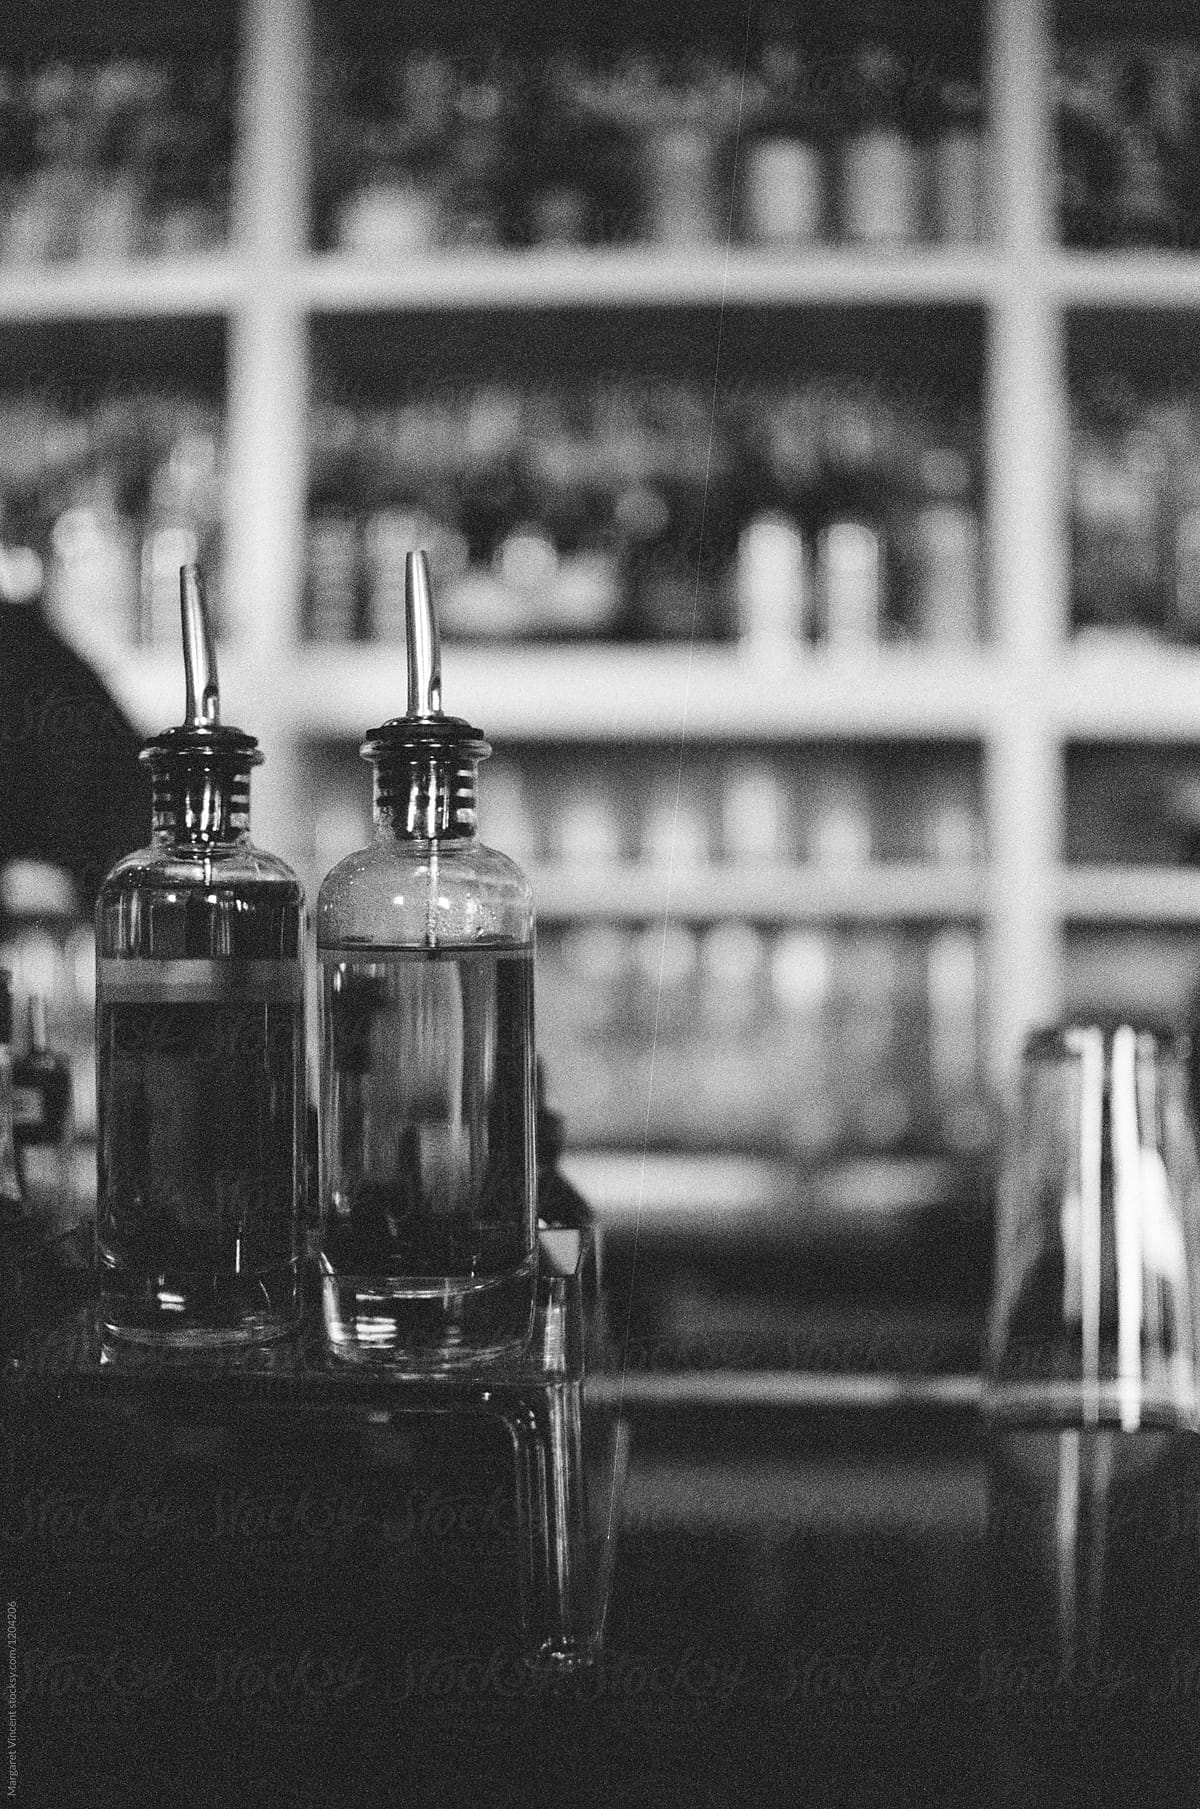 classic bar/restaurant scene in black and white